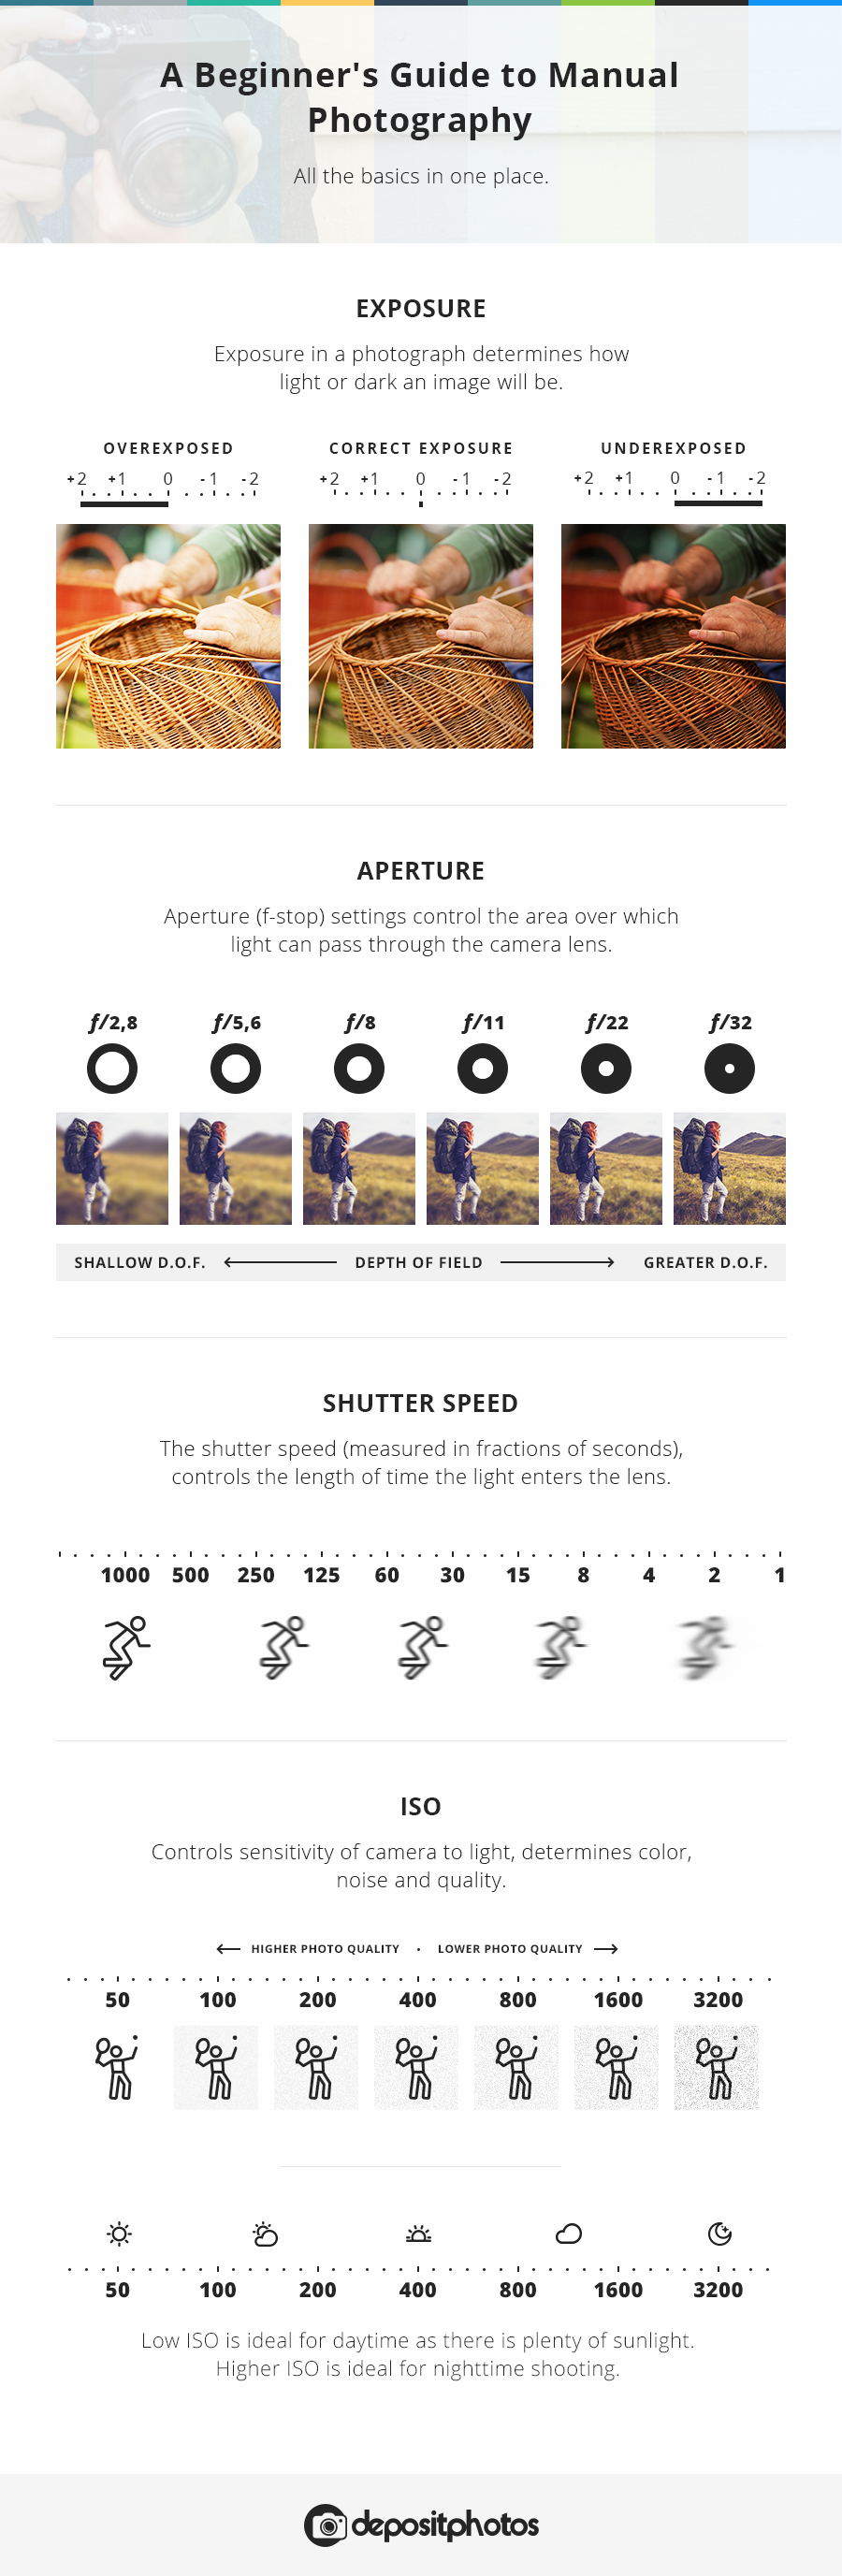 manual photography infographic depositphotos 2